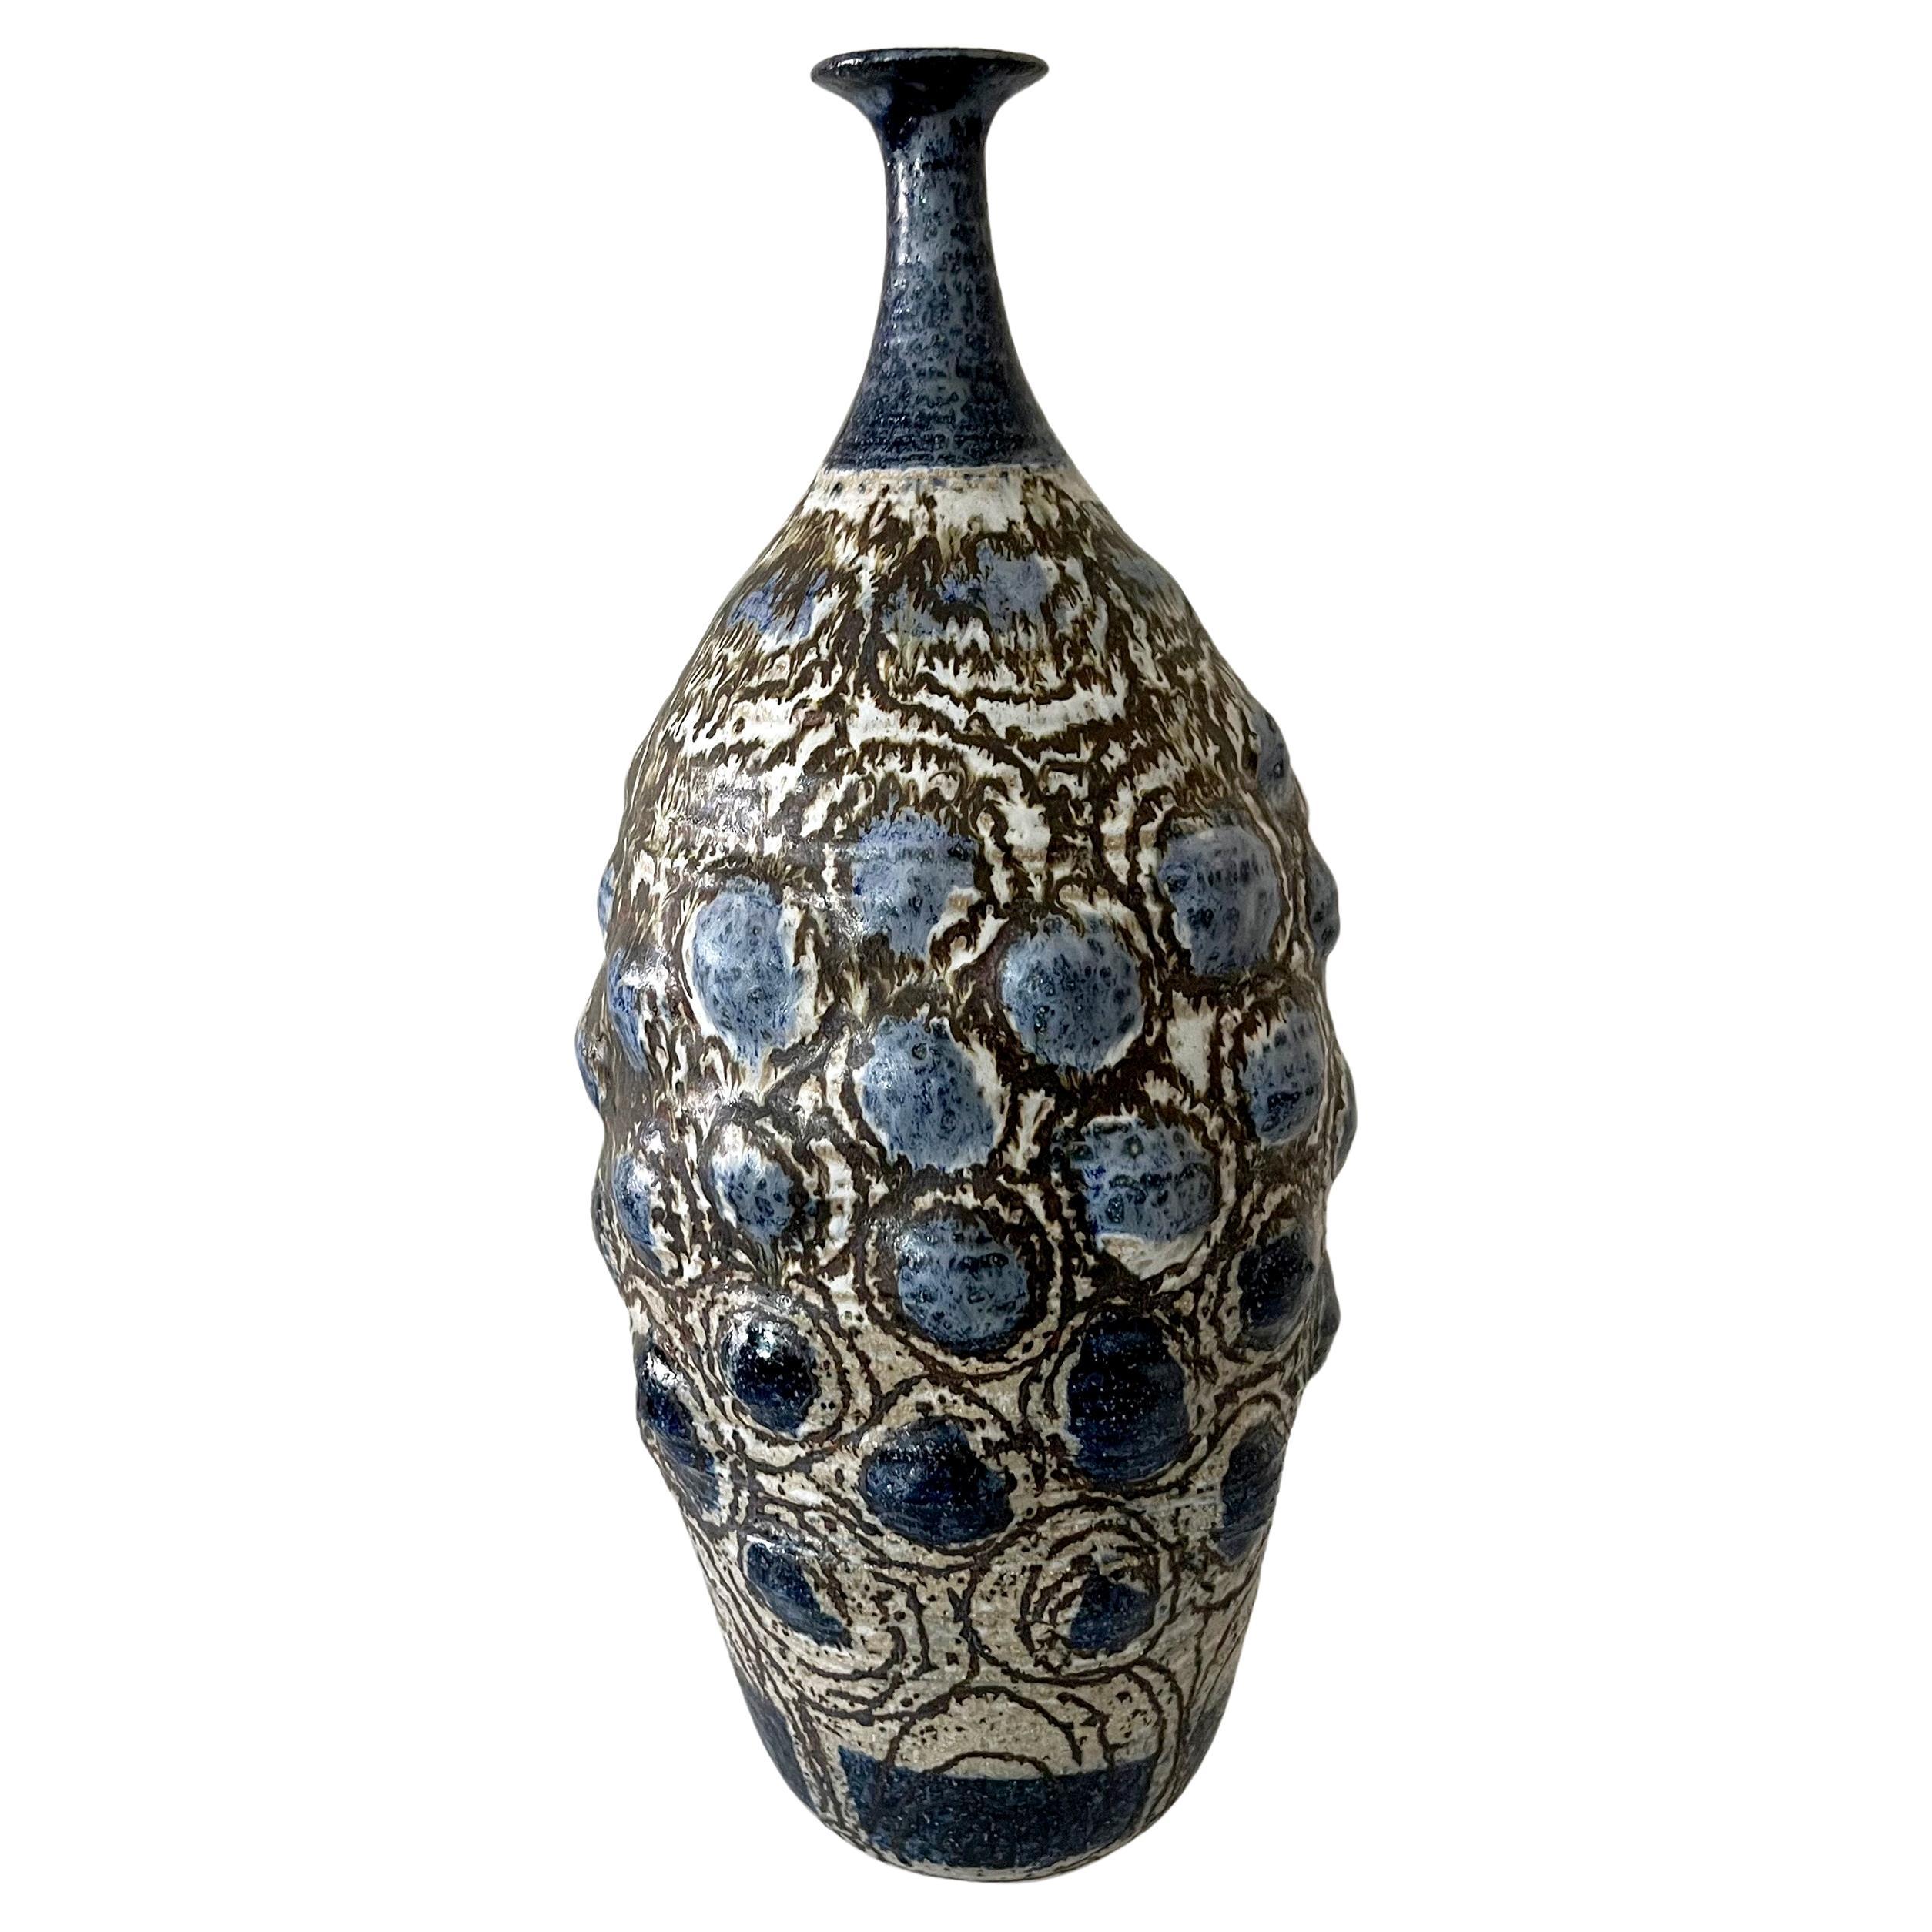 Large scale California studio stoneware bottle vase, maker unknown.  Piece measures 17